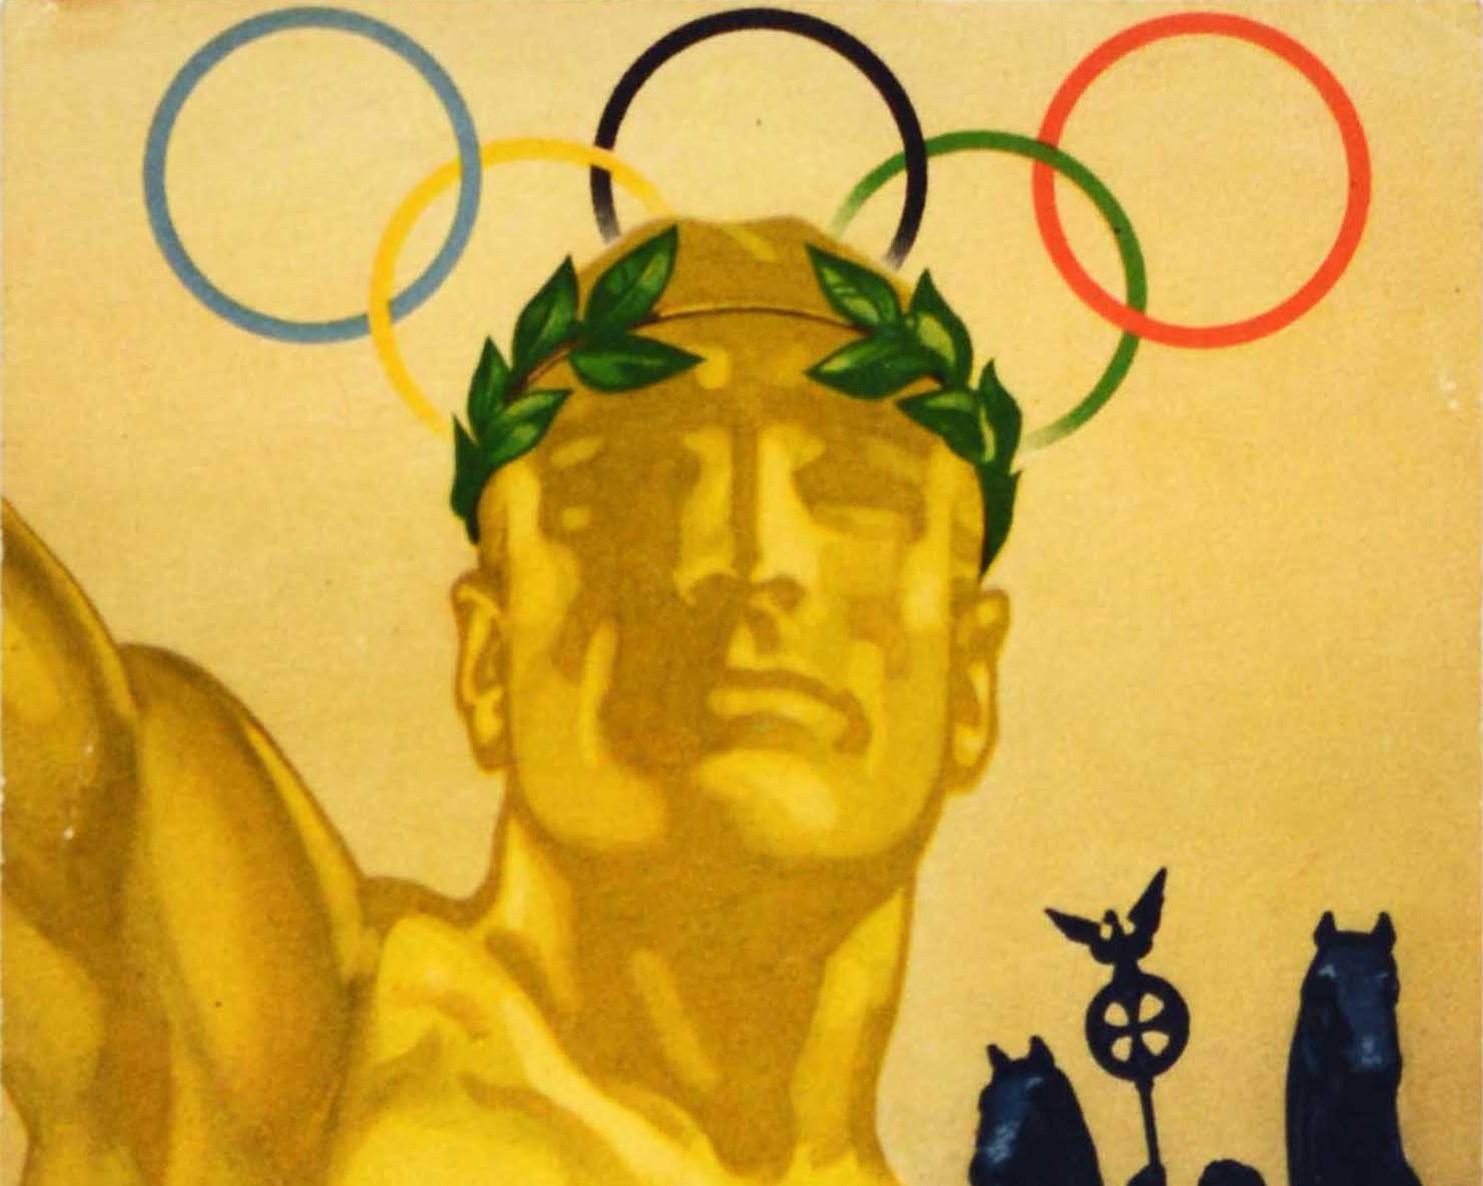 Original Vintage Olympic Games Poster - 1936 Berlin Olympics - Brandenburg Gate - Print by Franz Würbel